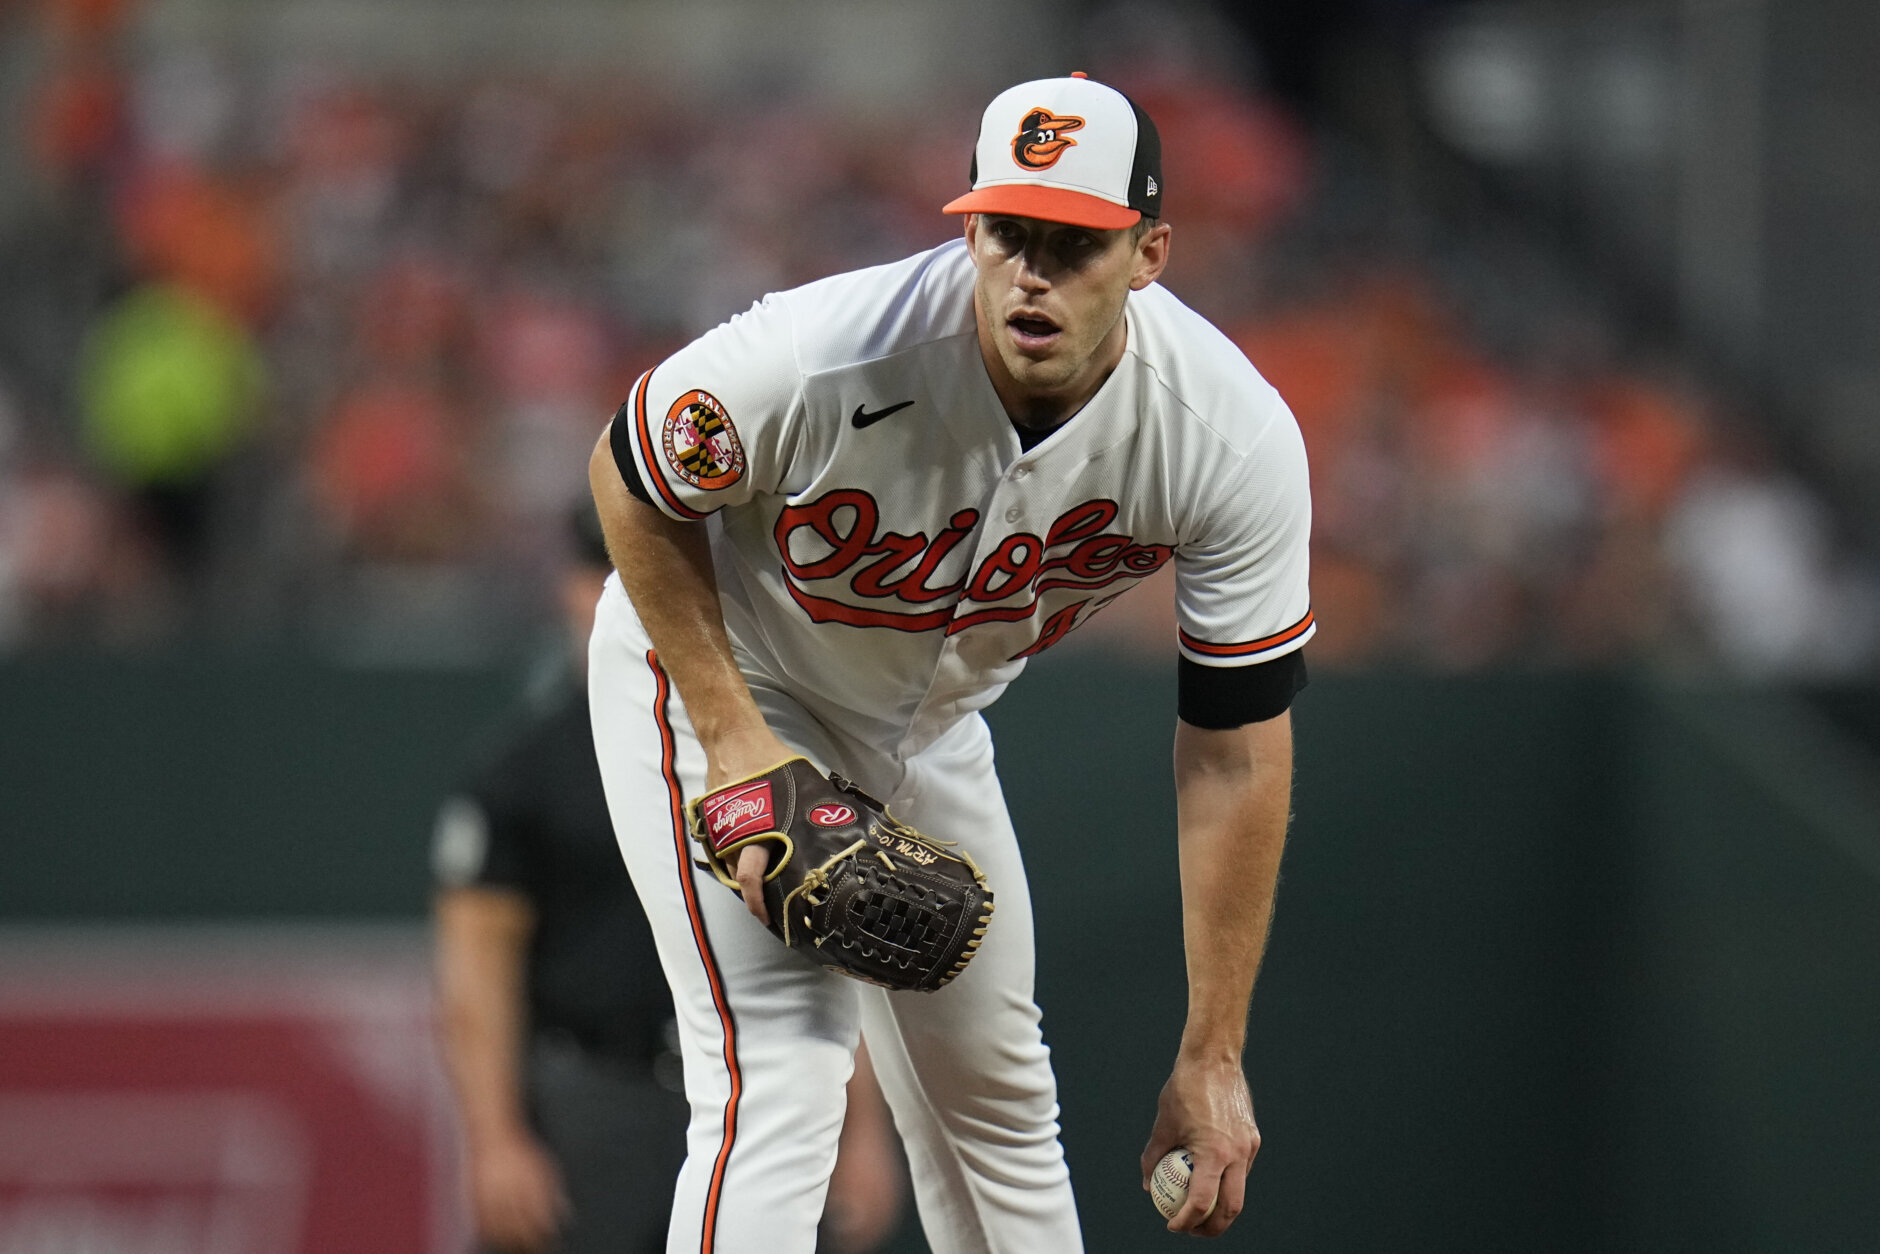 Cardinals' Adam Wainwright, 42, says he has thrown his last pitch